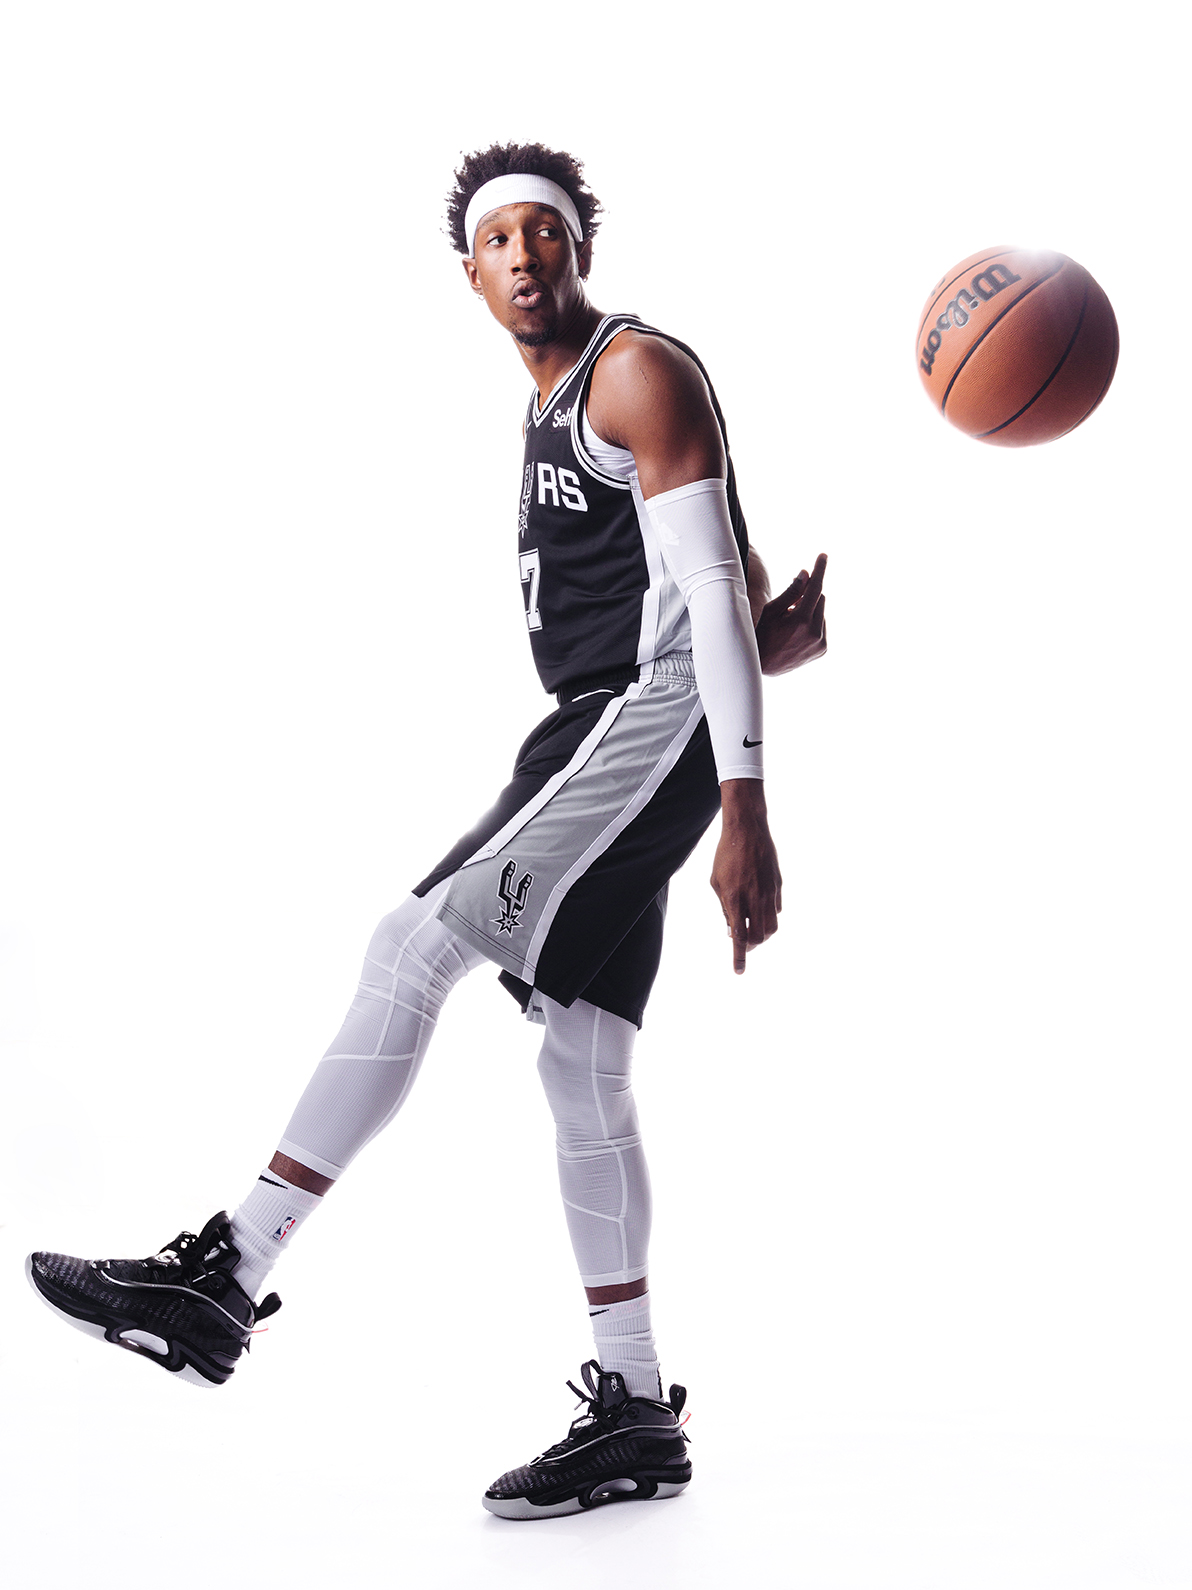 Josh Richardson, NBA basketball player for the San Antonio Spurs photographed by advertising portrait photographer Josh Huskin